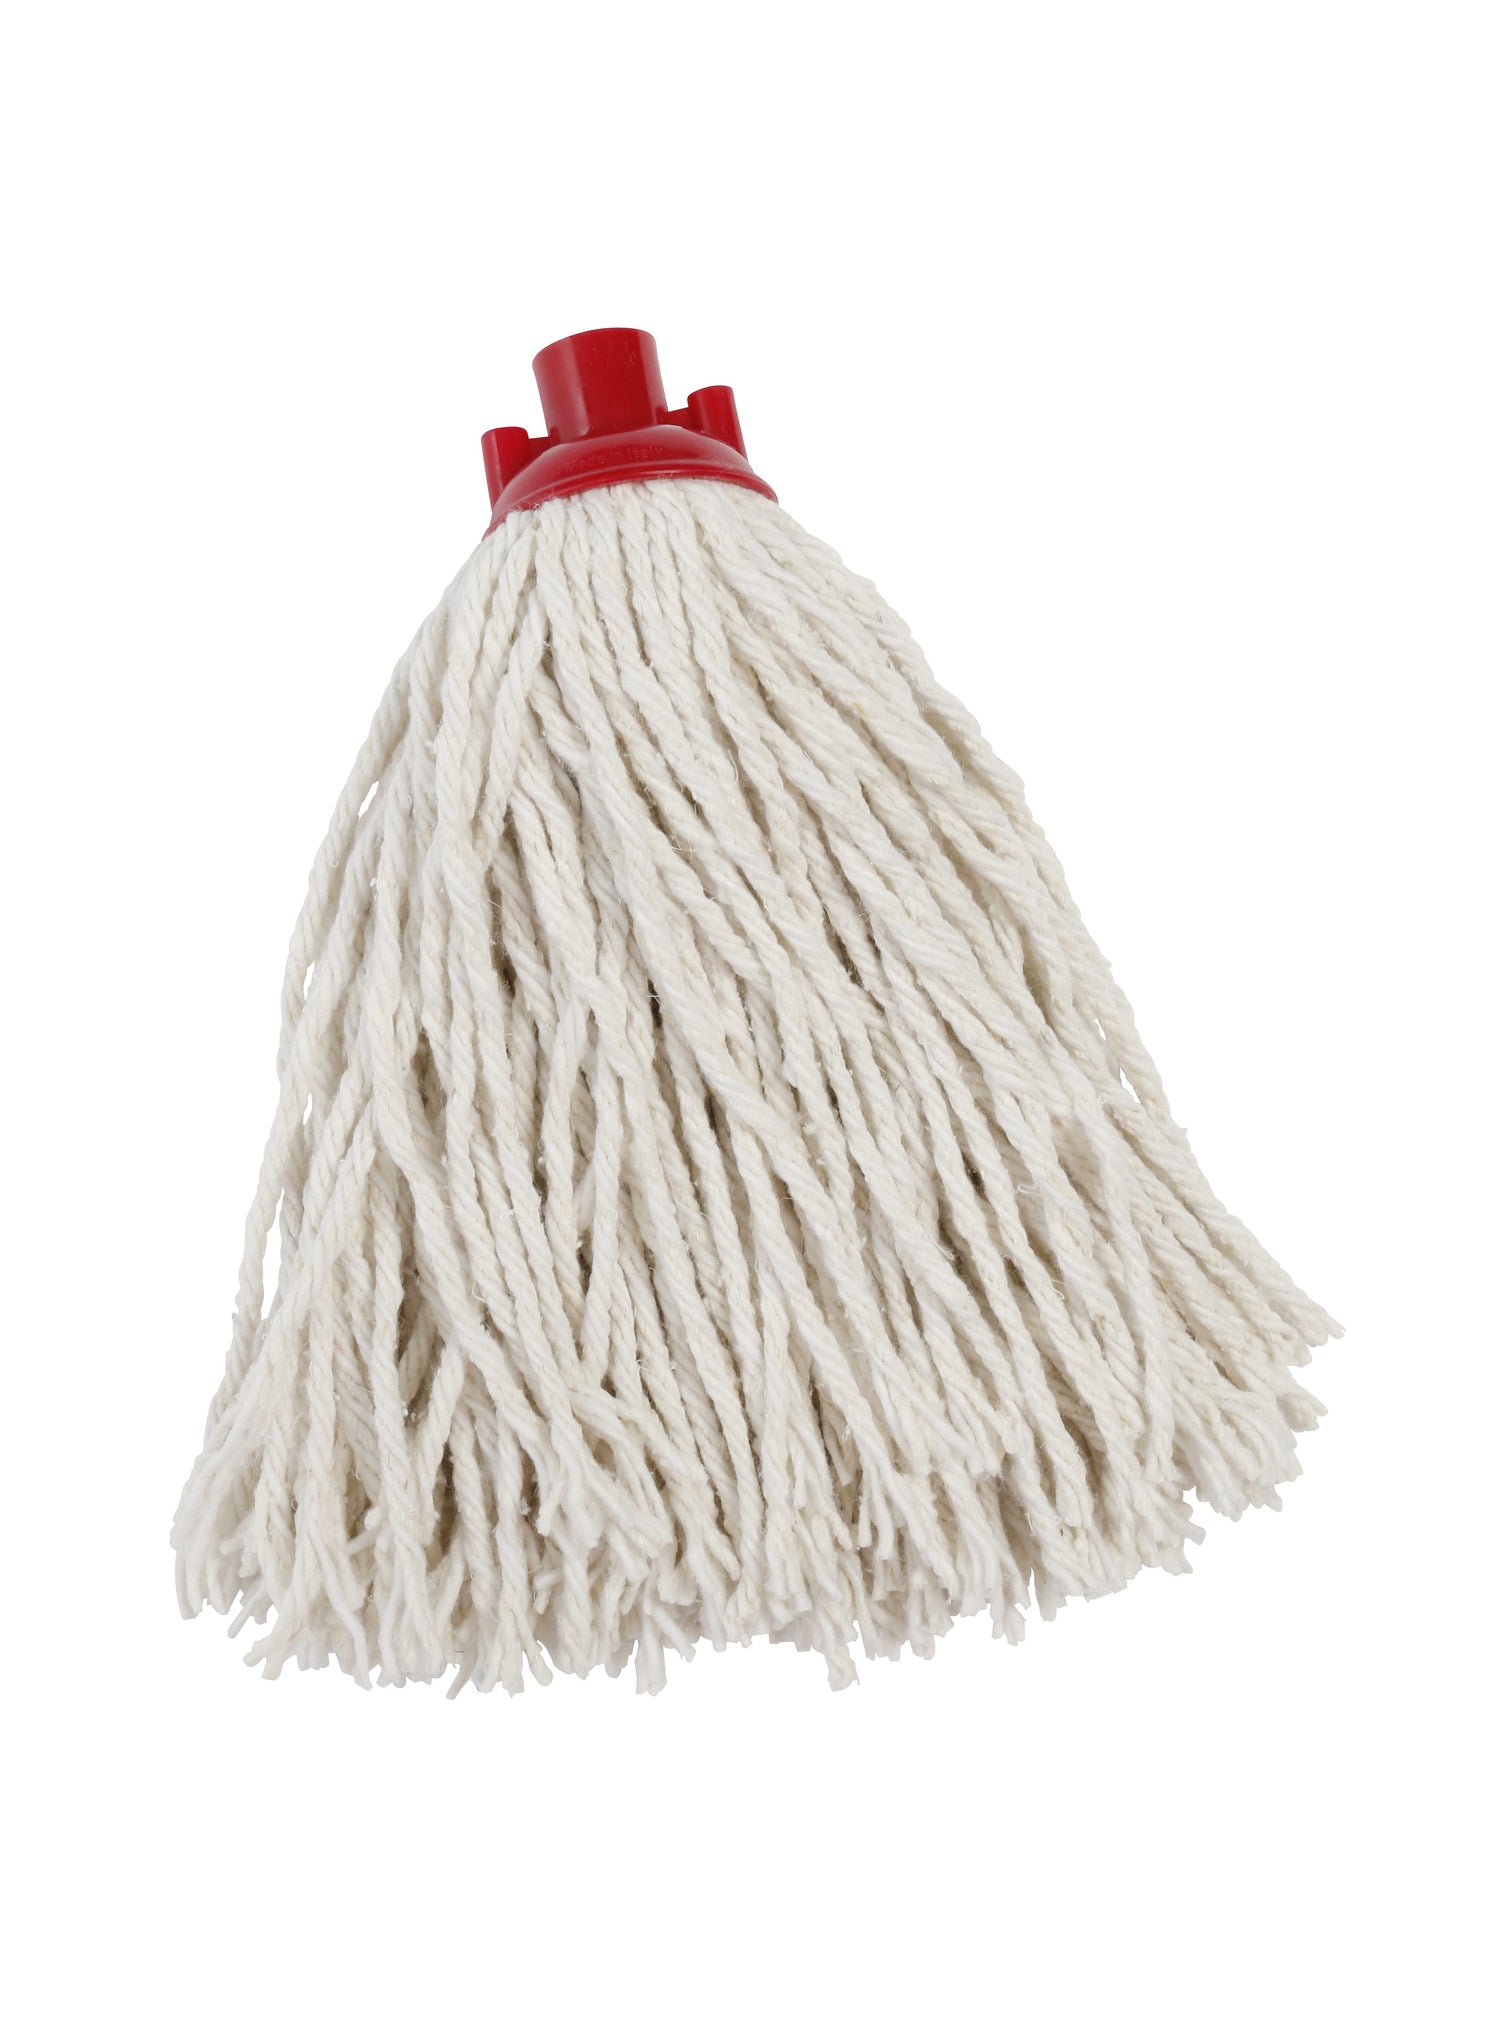 Dosco Cotton Yarn Mop Refill Red